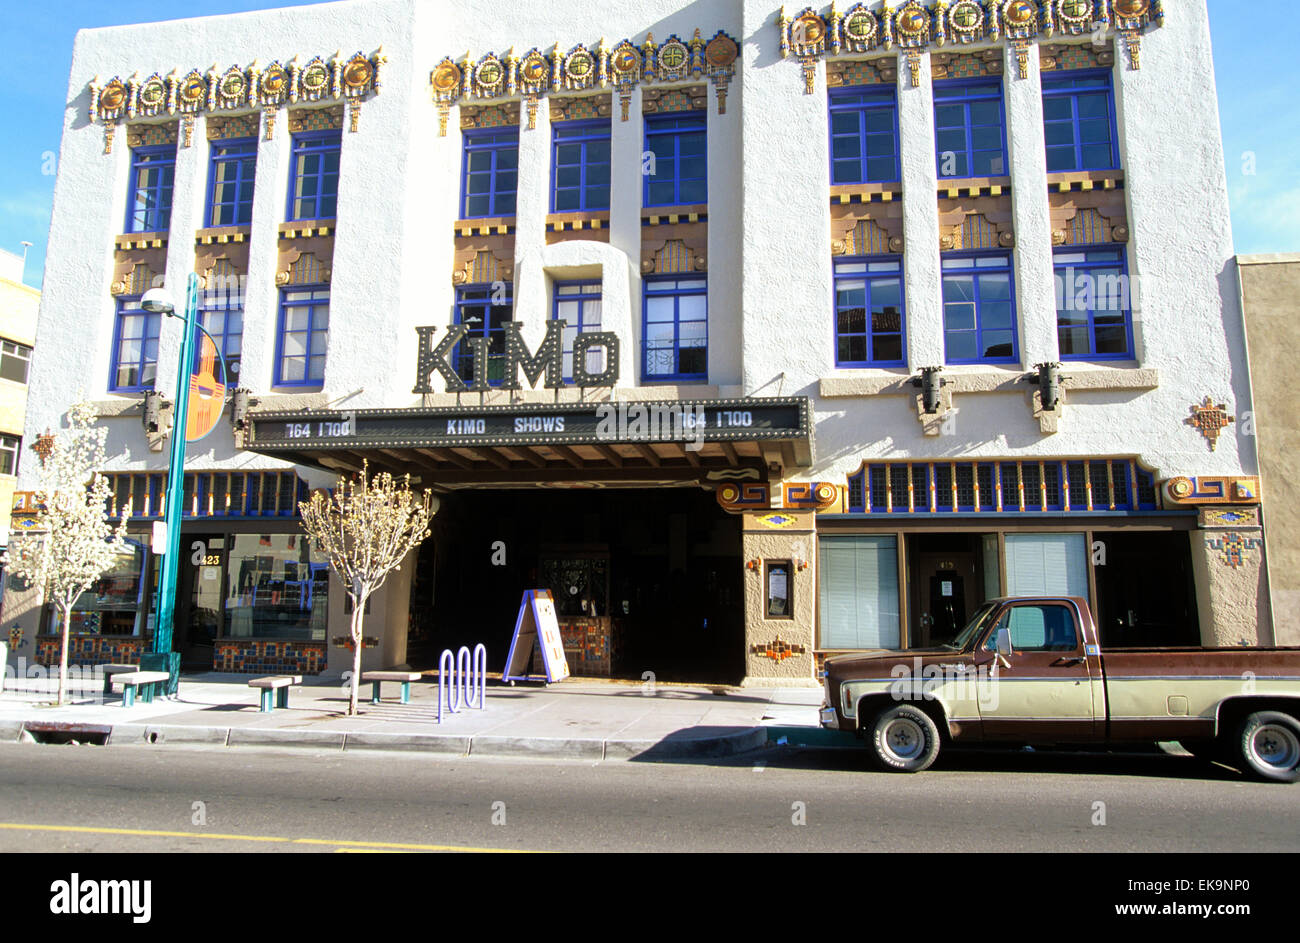 The 1927 King Theater on Central Avenue, Albuquerque, New Mexico, USA. Stock Photo